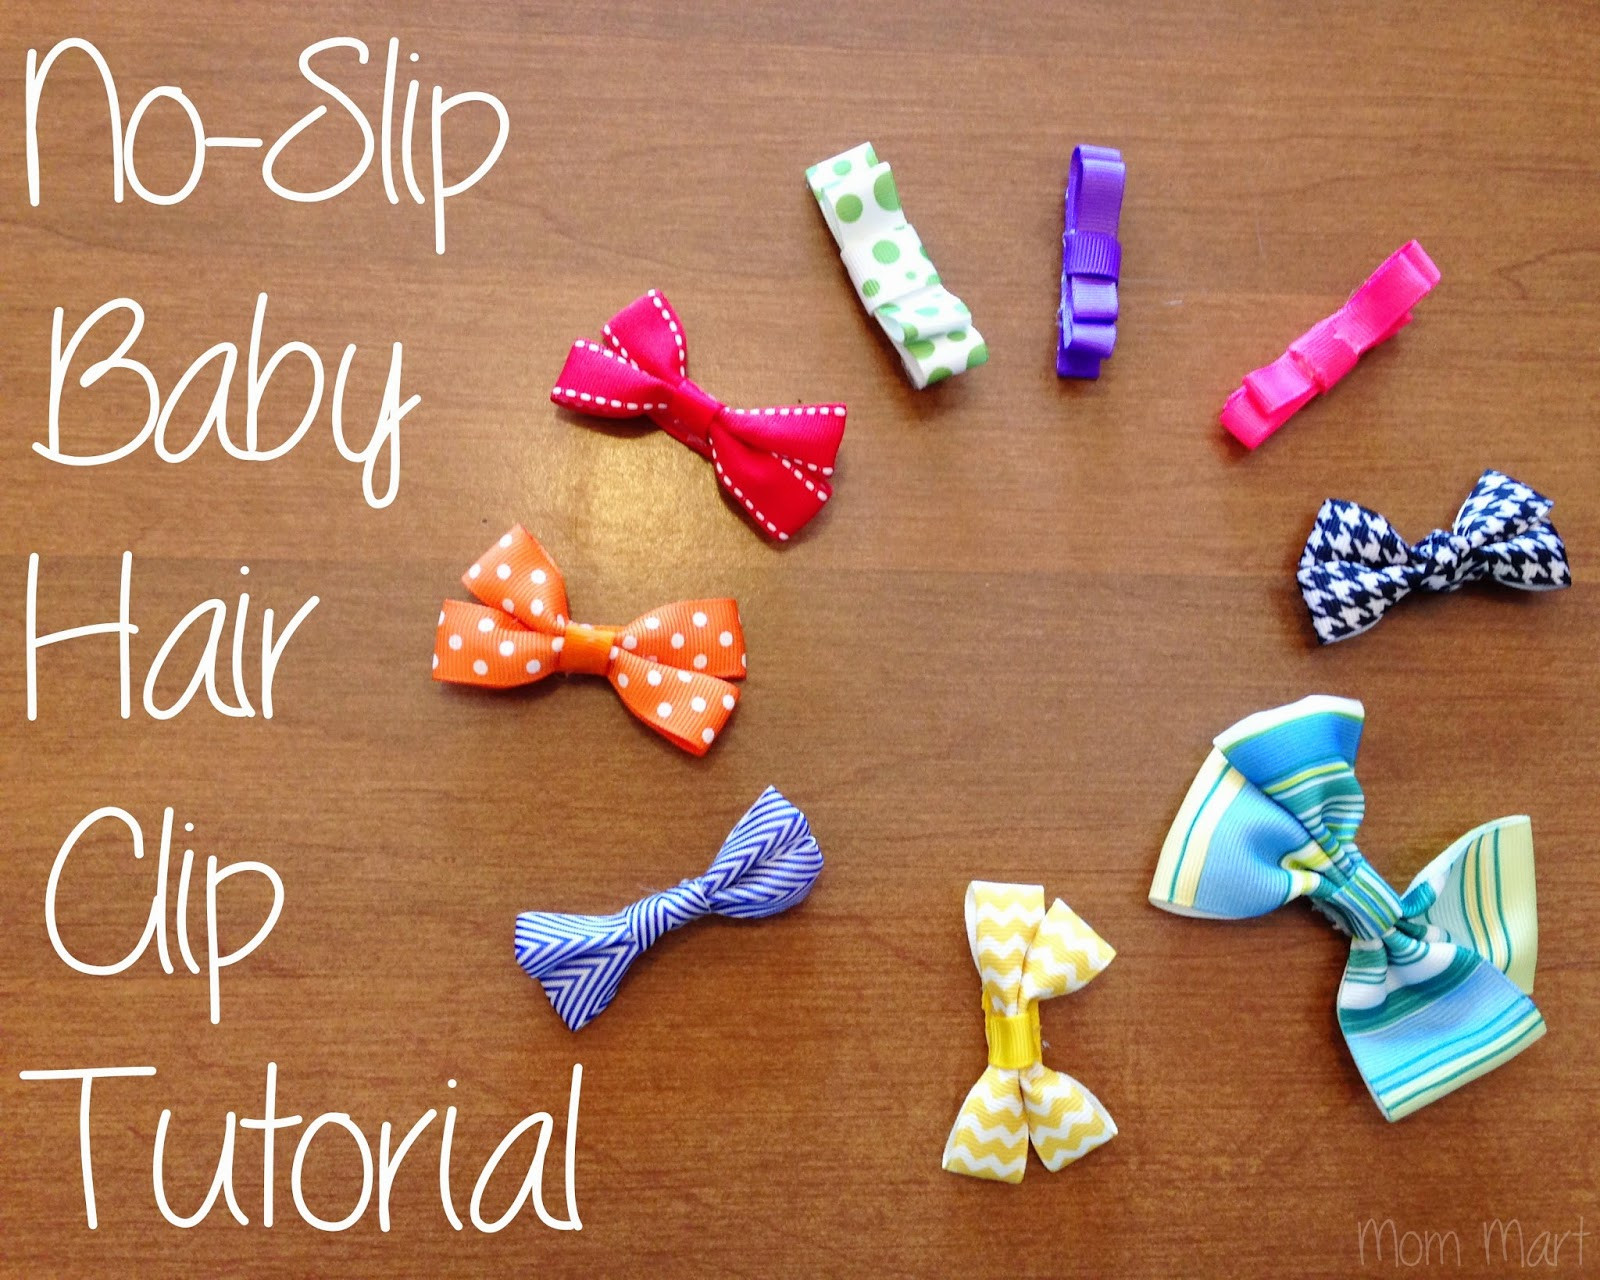 DIY Baby Hair Clips
 Mom Mart DIY baby hair clips with a no slip grip Tutorial